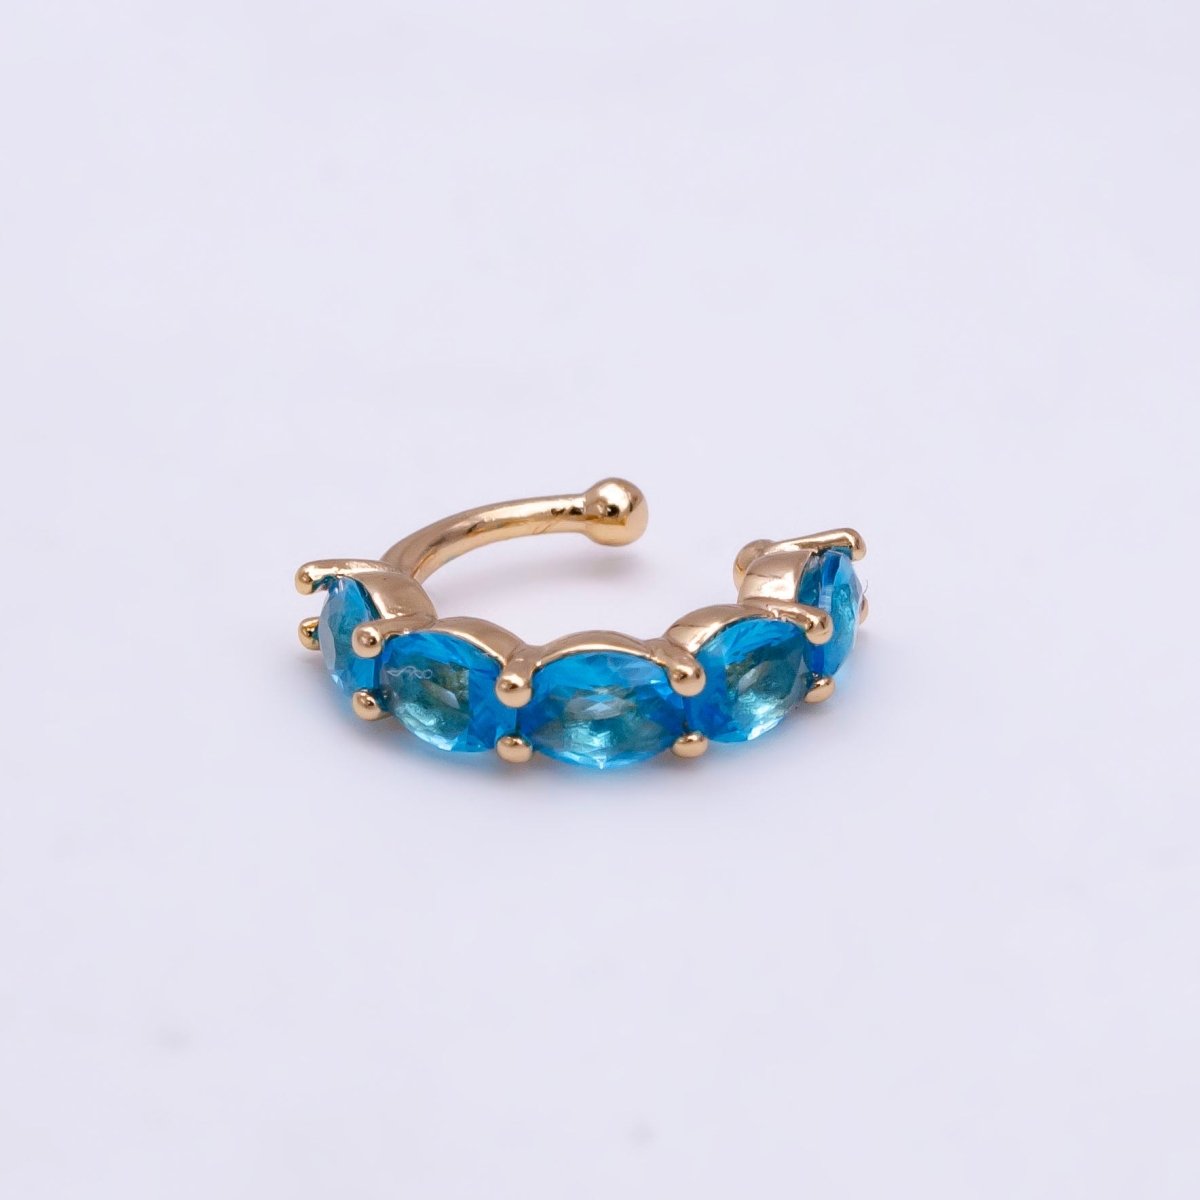 1x Ear cuff no piercing Gold with 8 Different Color cz, ear cuff, minimalist jewelry conch cuff AI-001~AI-008 - DLUXCA